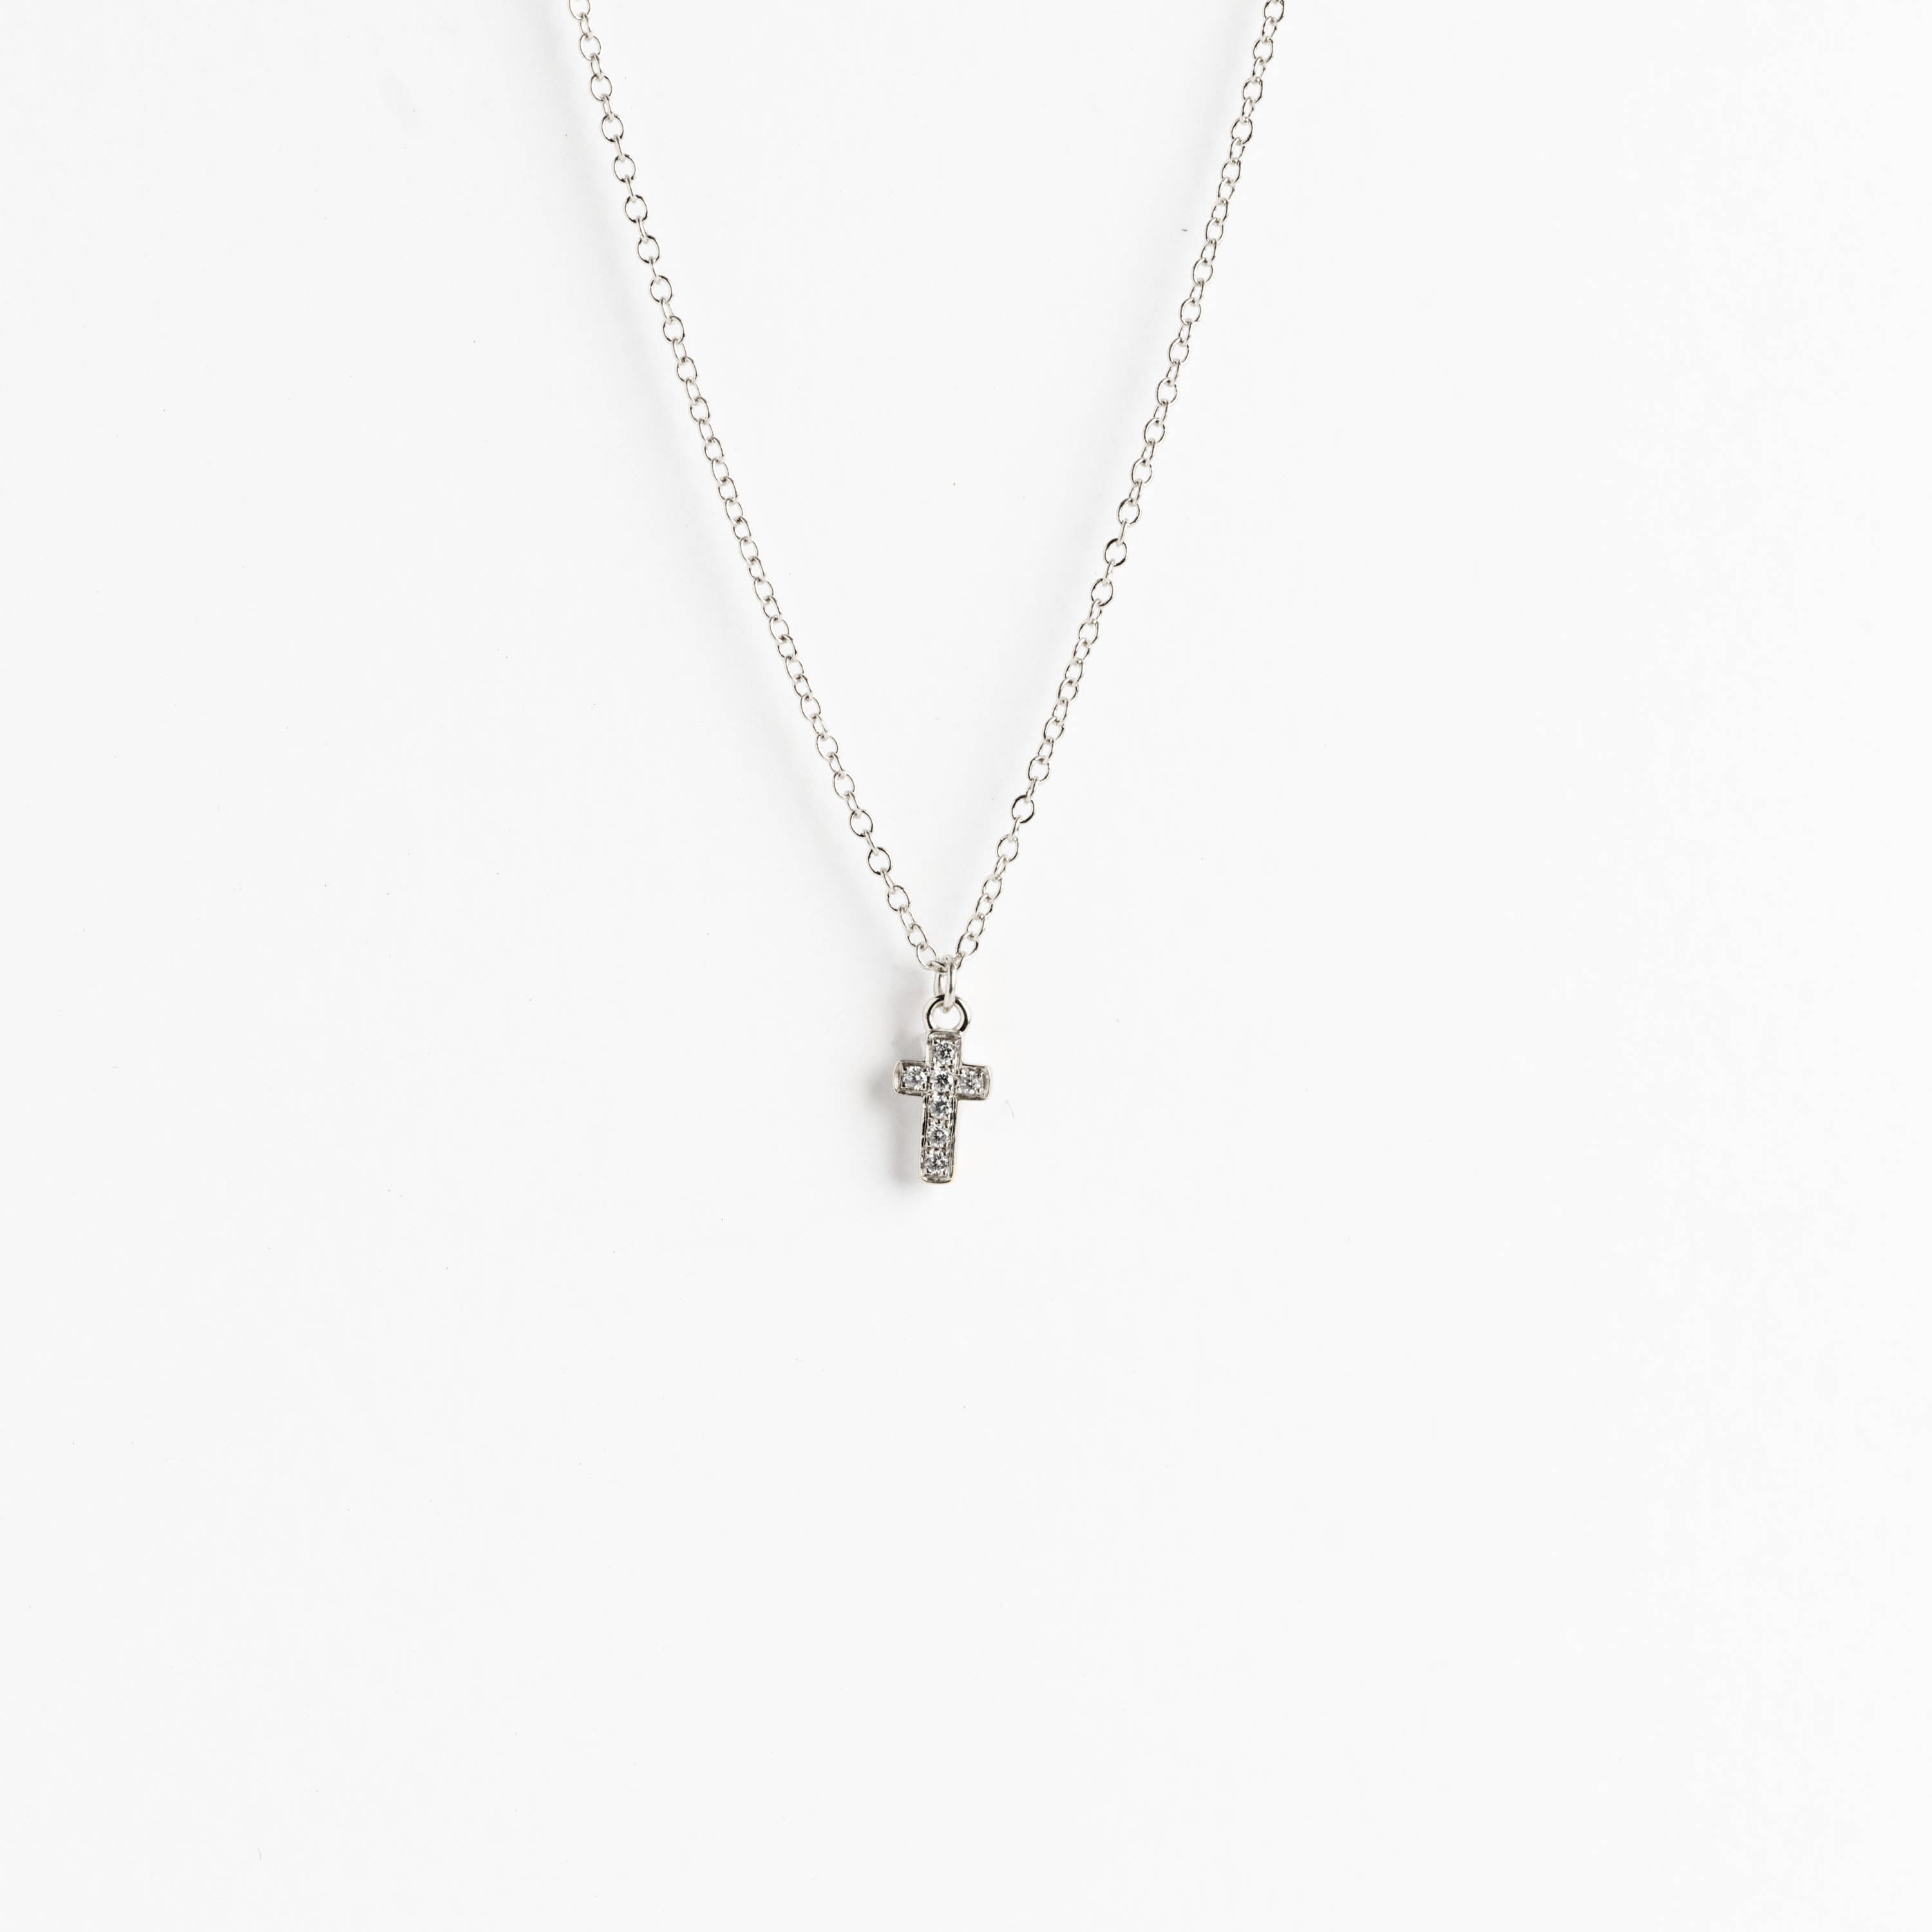 The Dainty Diamond Cross Necklace